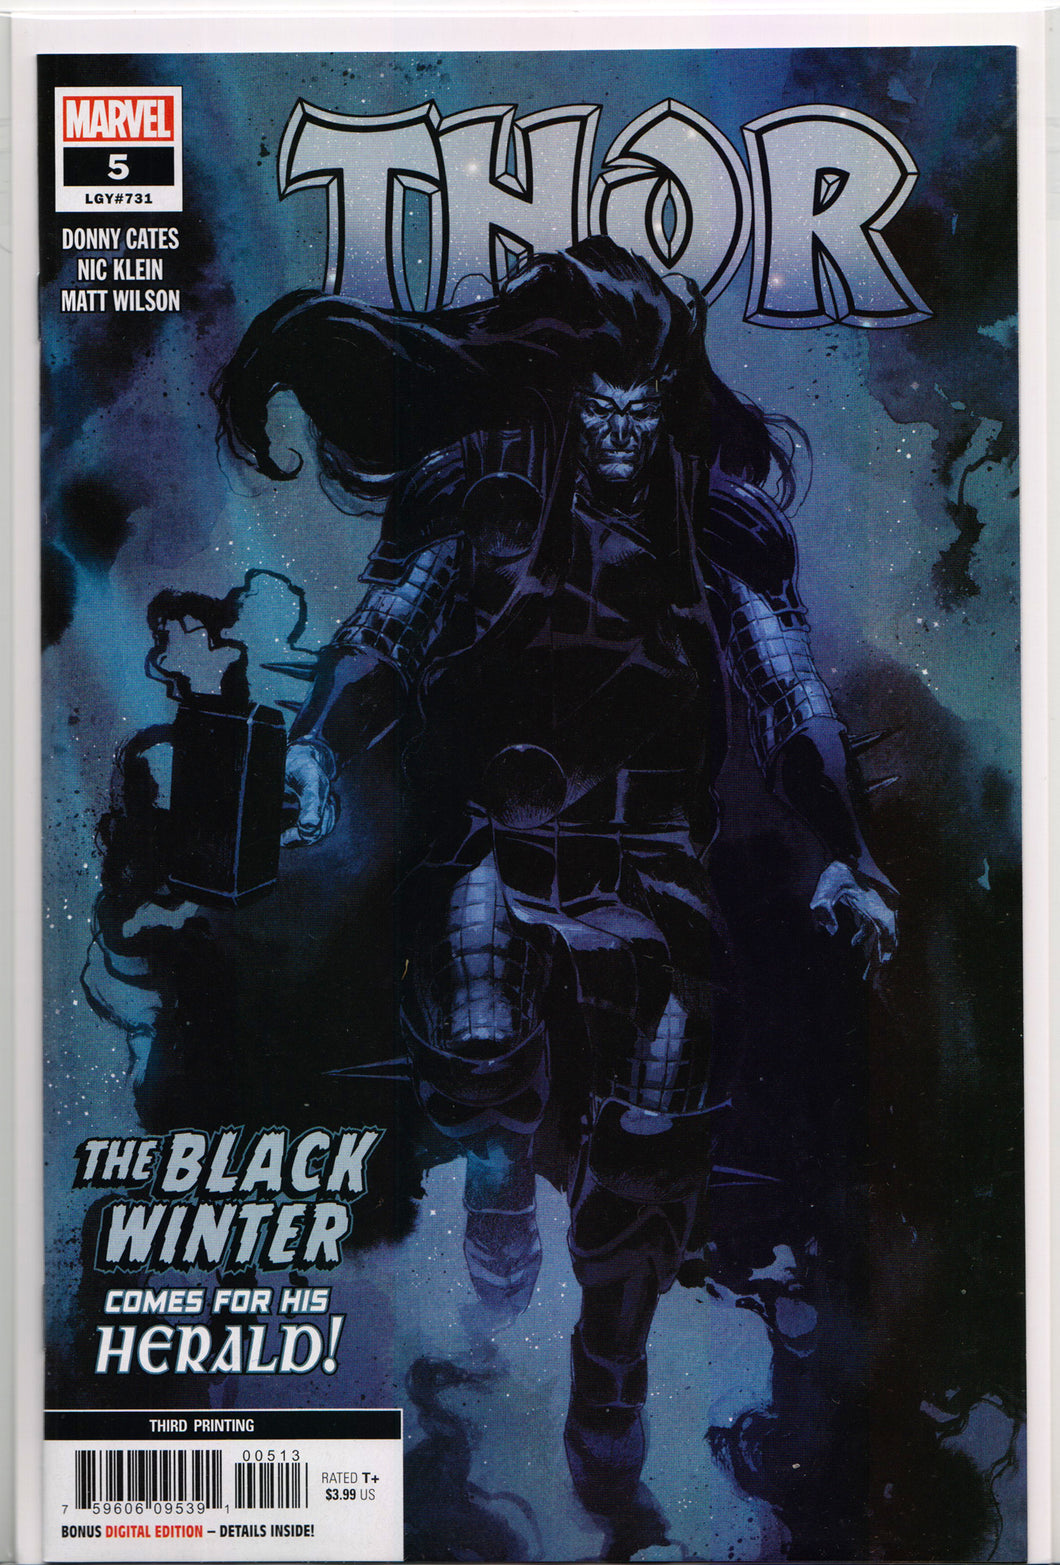 THOR #5 (3RD PRINT VARIANT)(BLACK WINTER) Comic Book ~ Marvel Comics